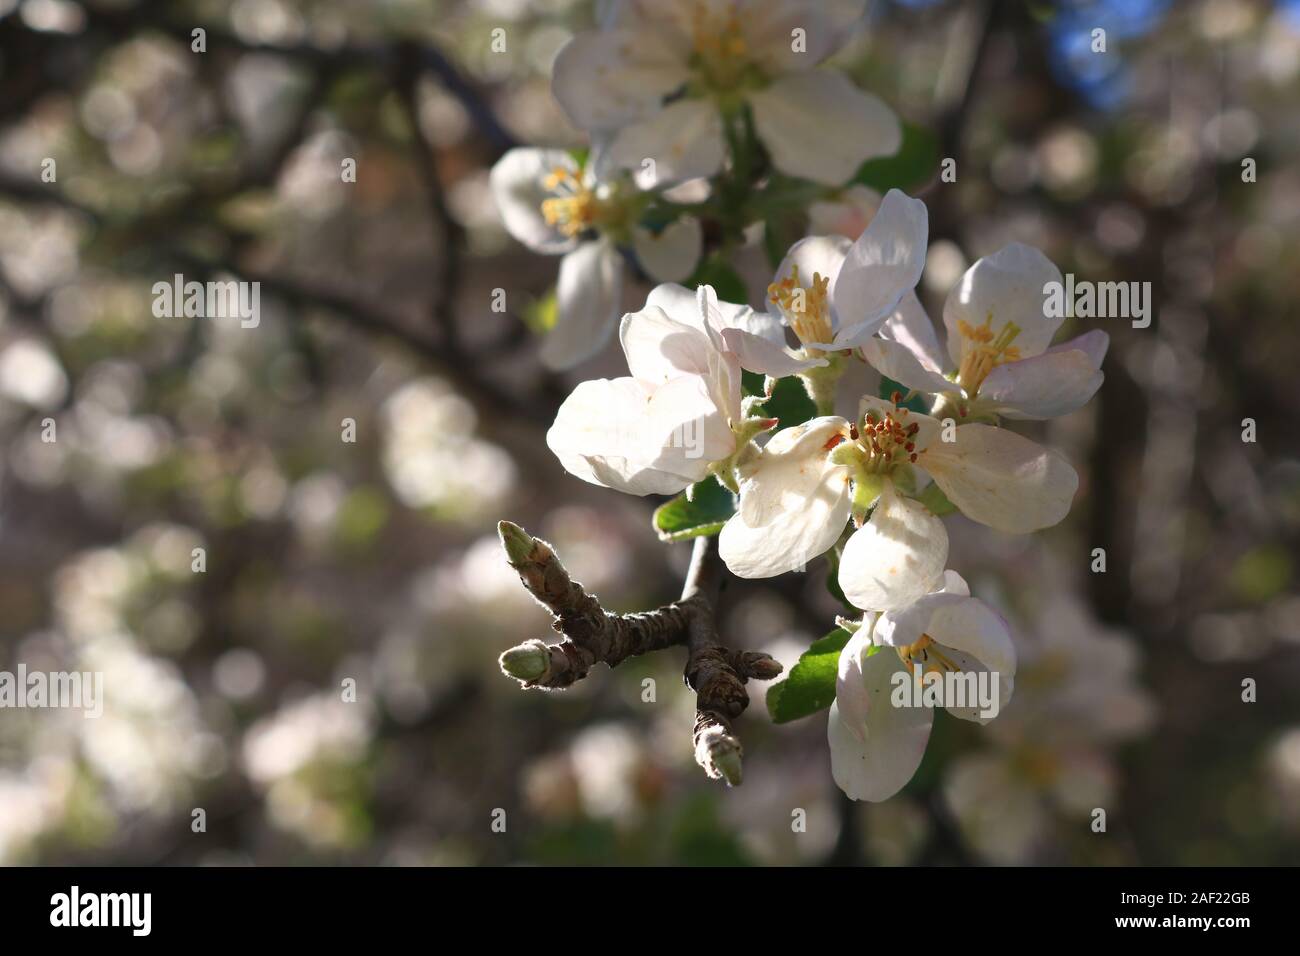 sunlight in 1000 flowers apple tree Stock Photo